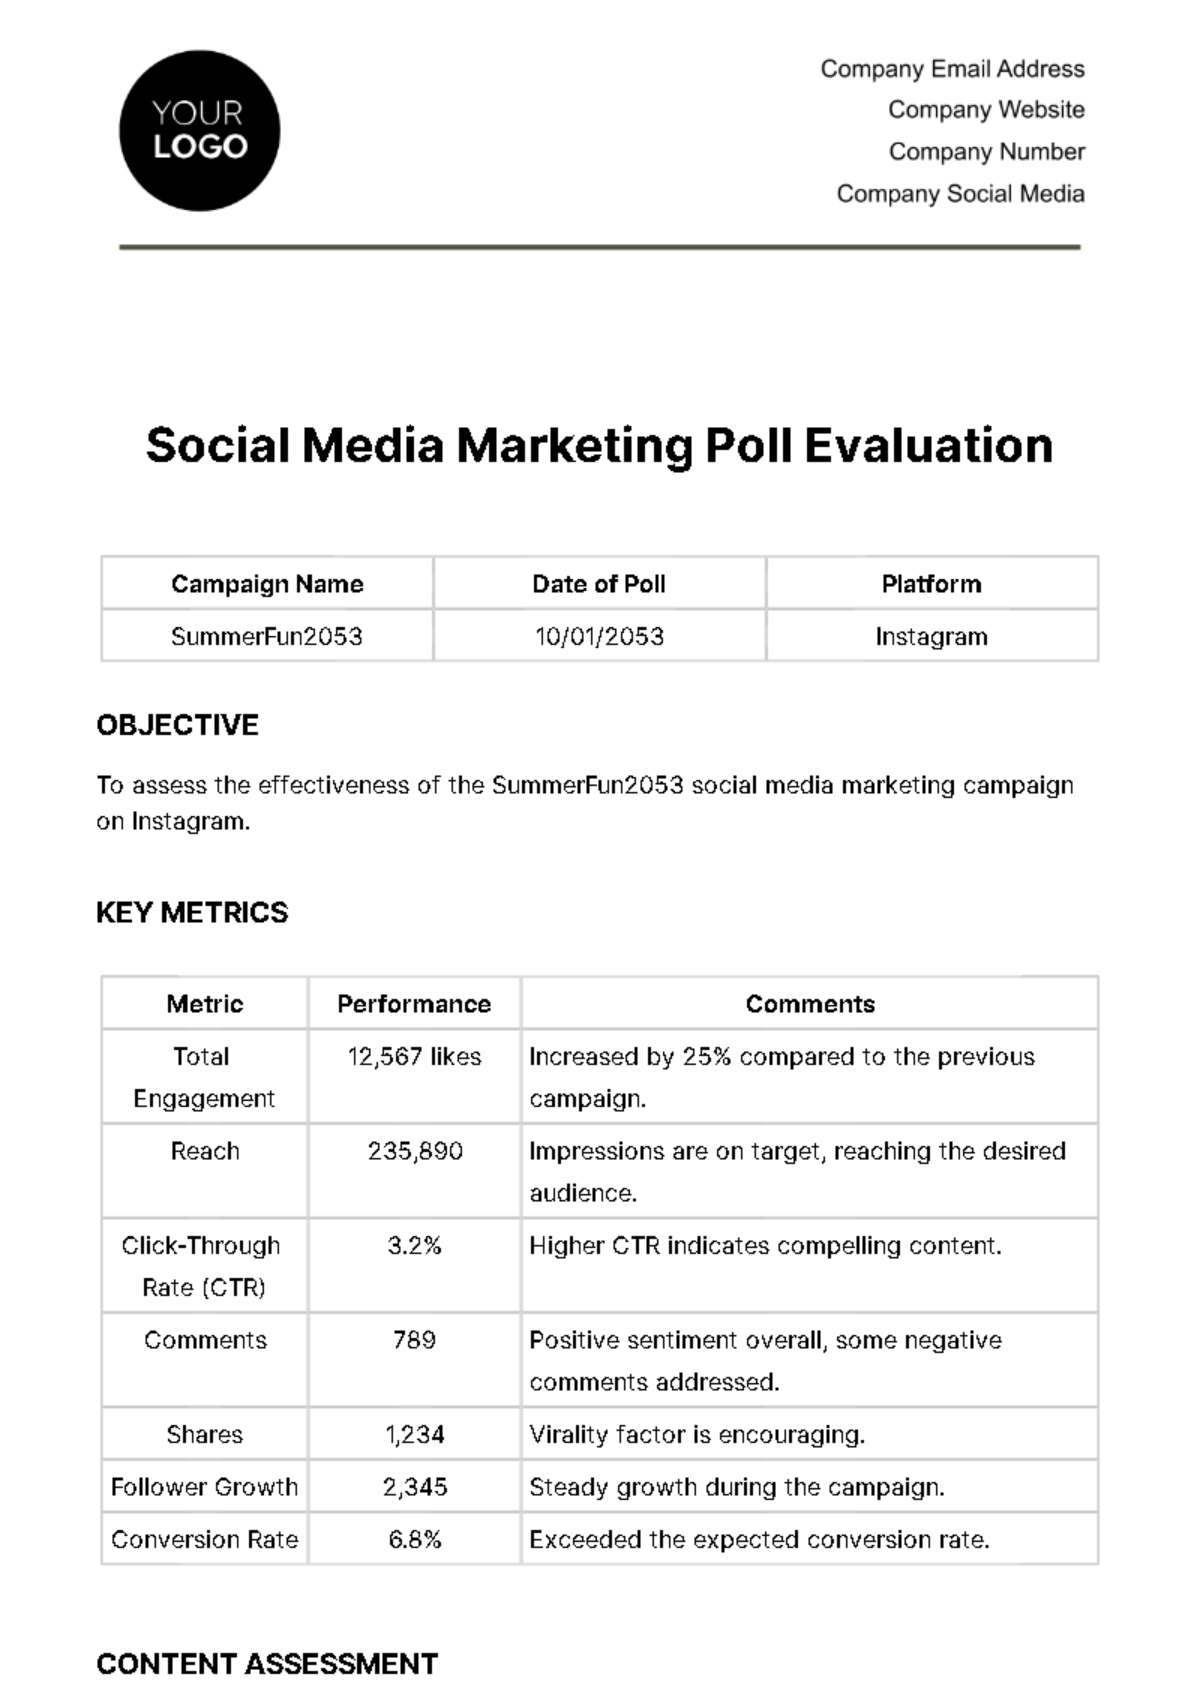 Free Social Media Marketing Poll Evaluation Template